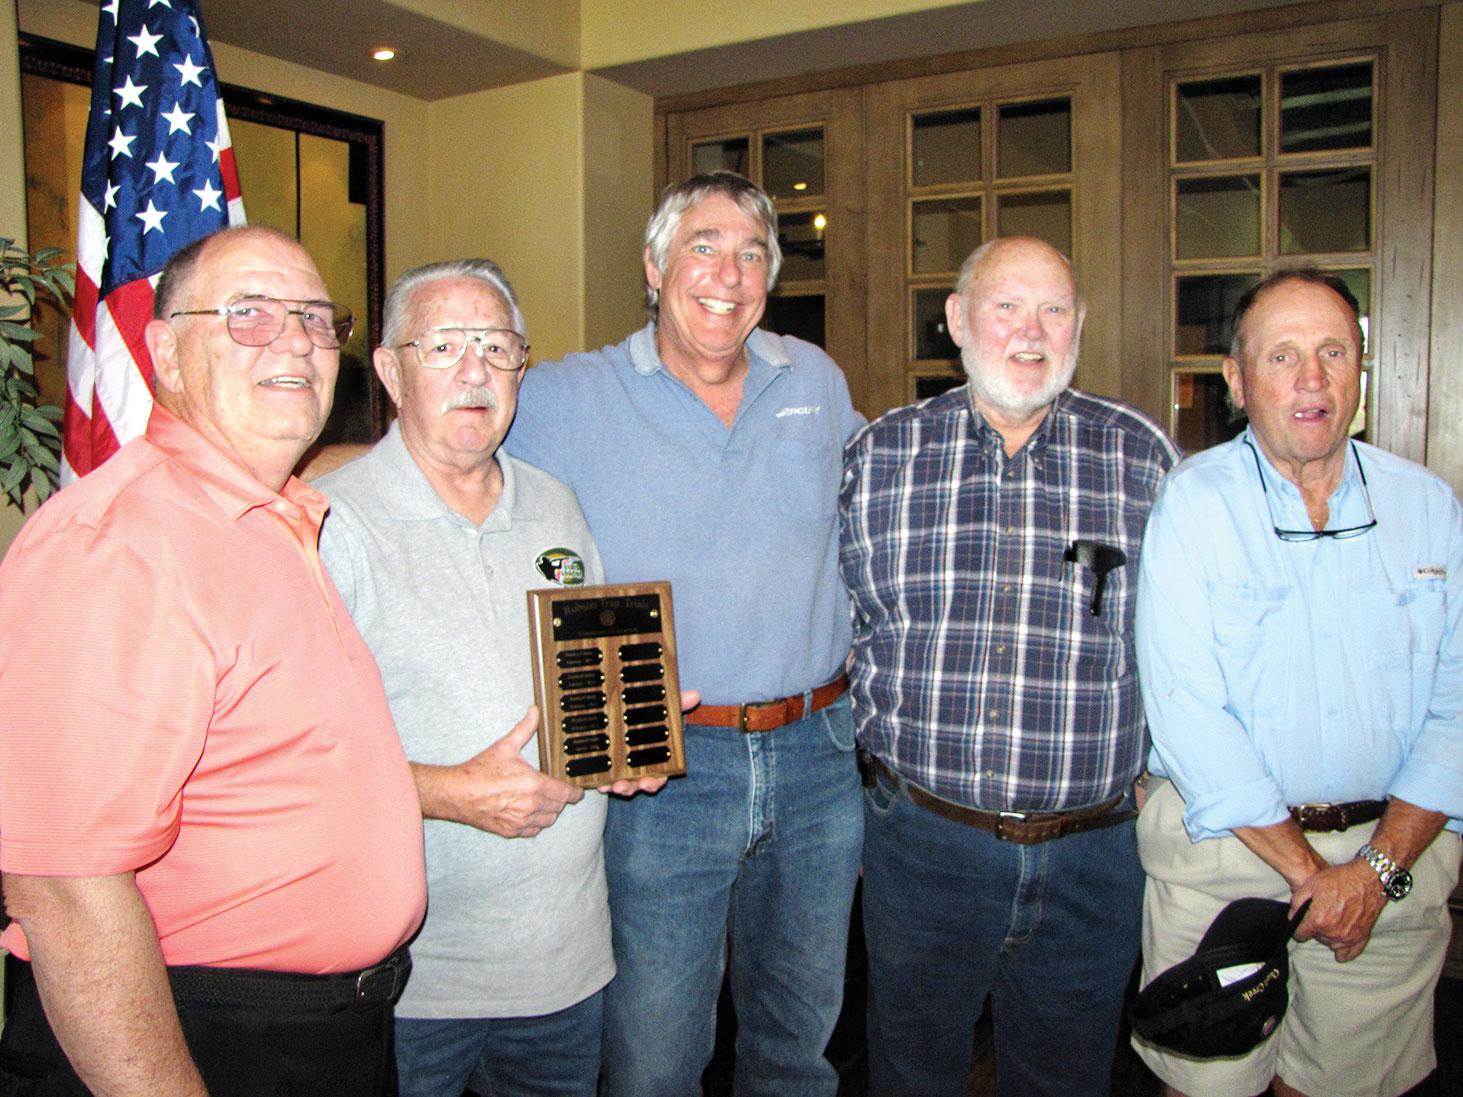 The winning Quail Creek team, left to right: Ron Darrah, Dennis Finn, Jeff Krueger, Roger Fendt and Mike Kiger